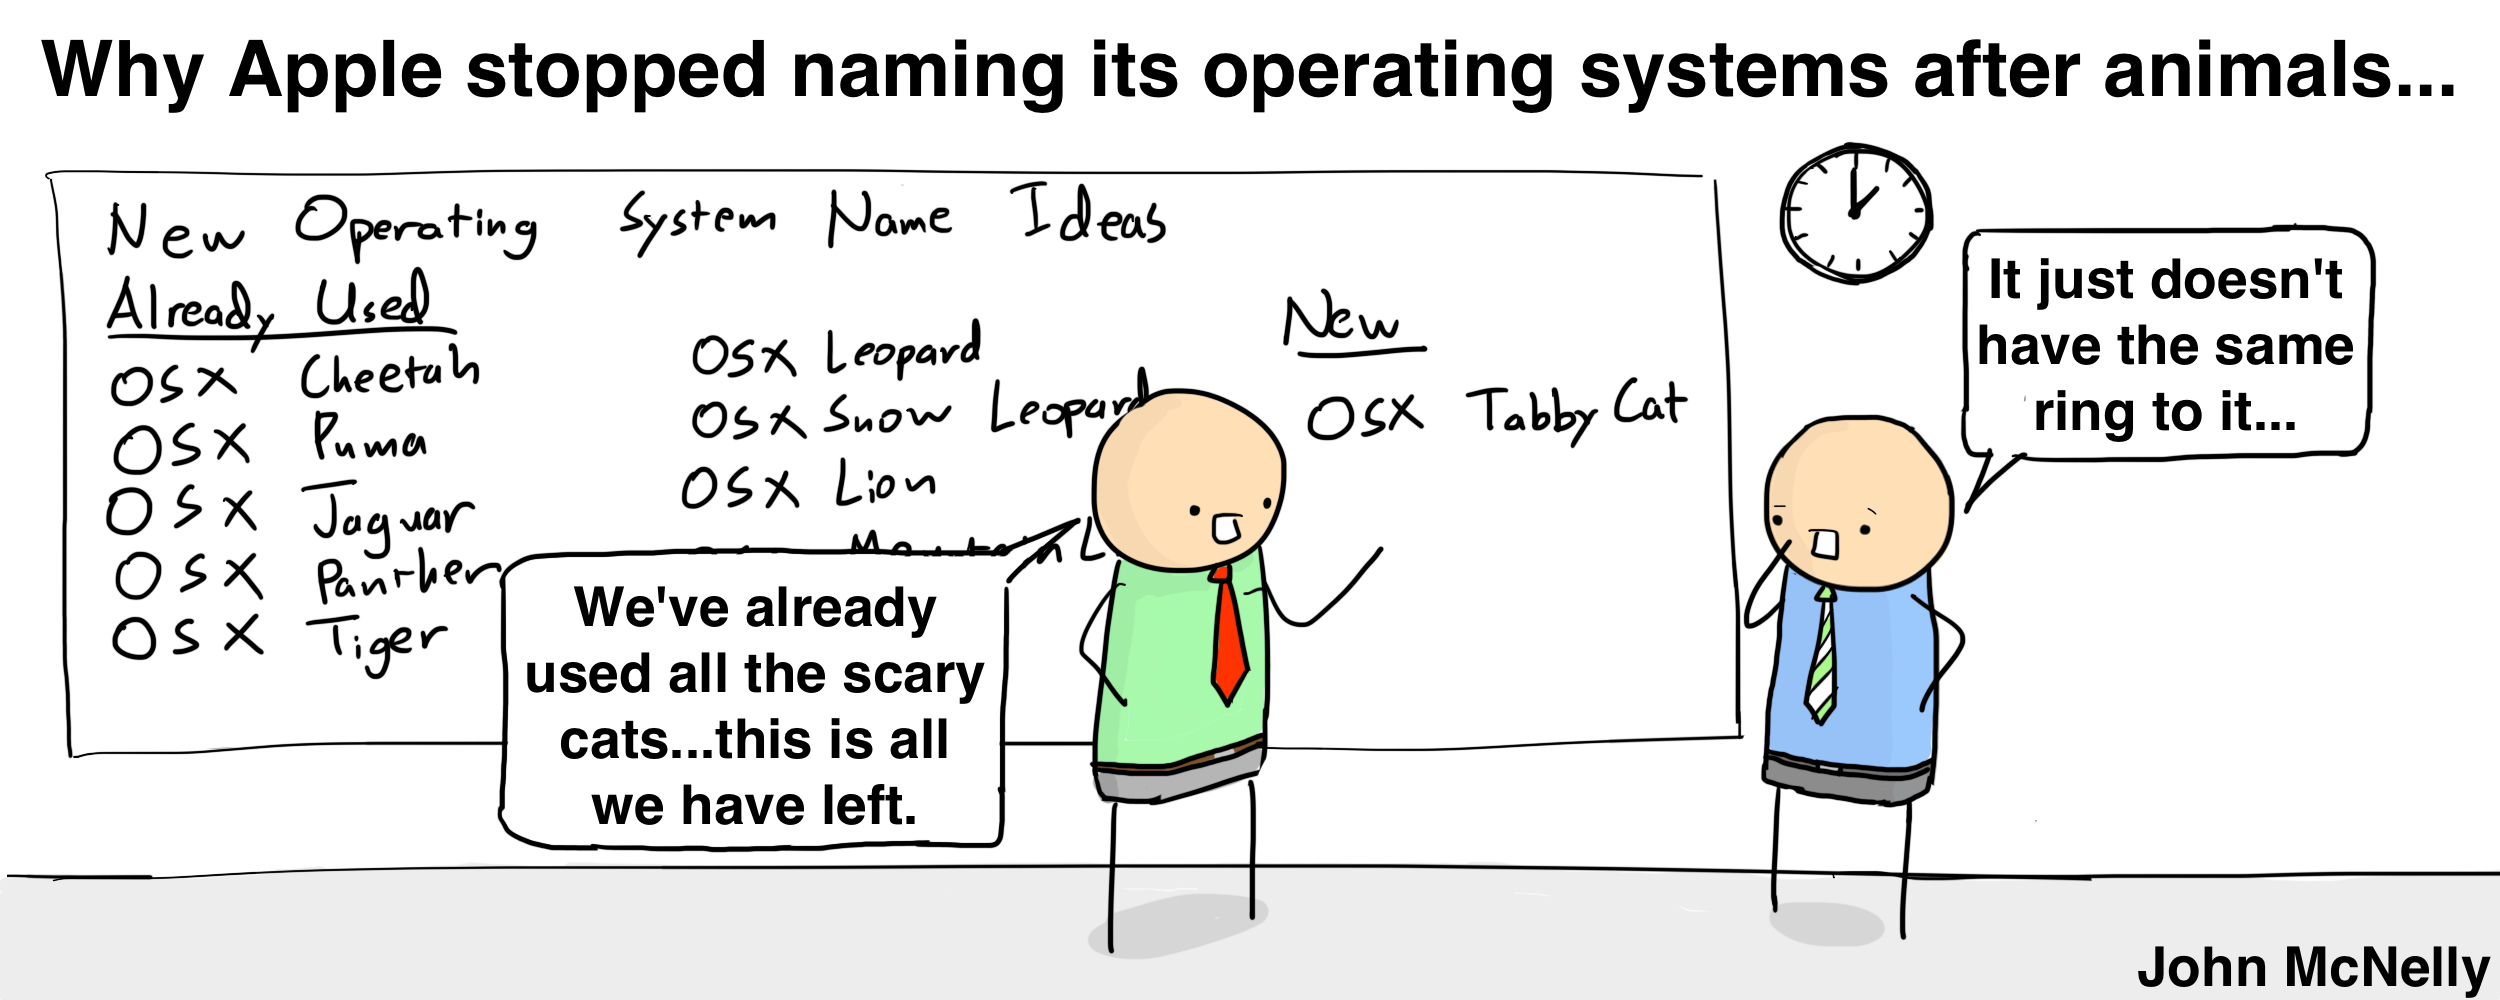 OSX Tabby Cat